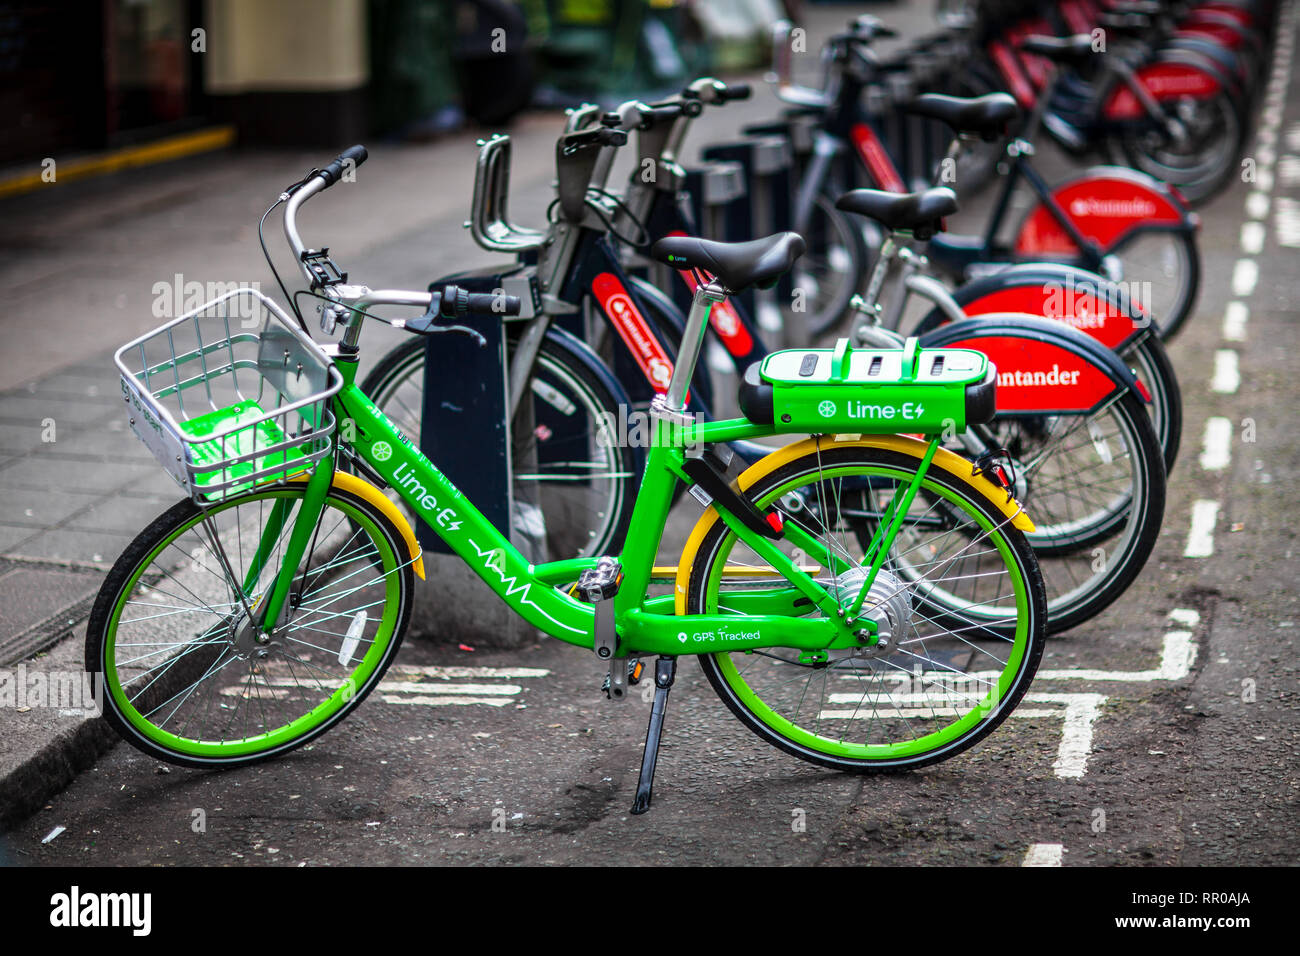 Kalk Elektrofahrrad London - ein Kalk elektrische Fahrrad geparkt Neben regelmäßigen Santander Fahrräder in London, Großbritannien Stockfoto